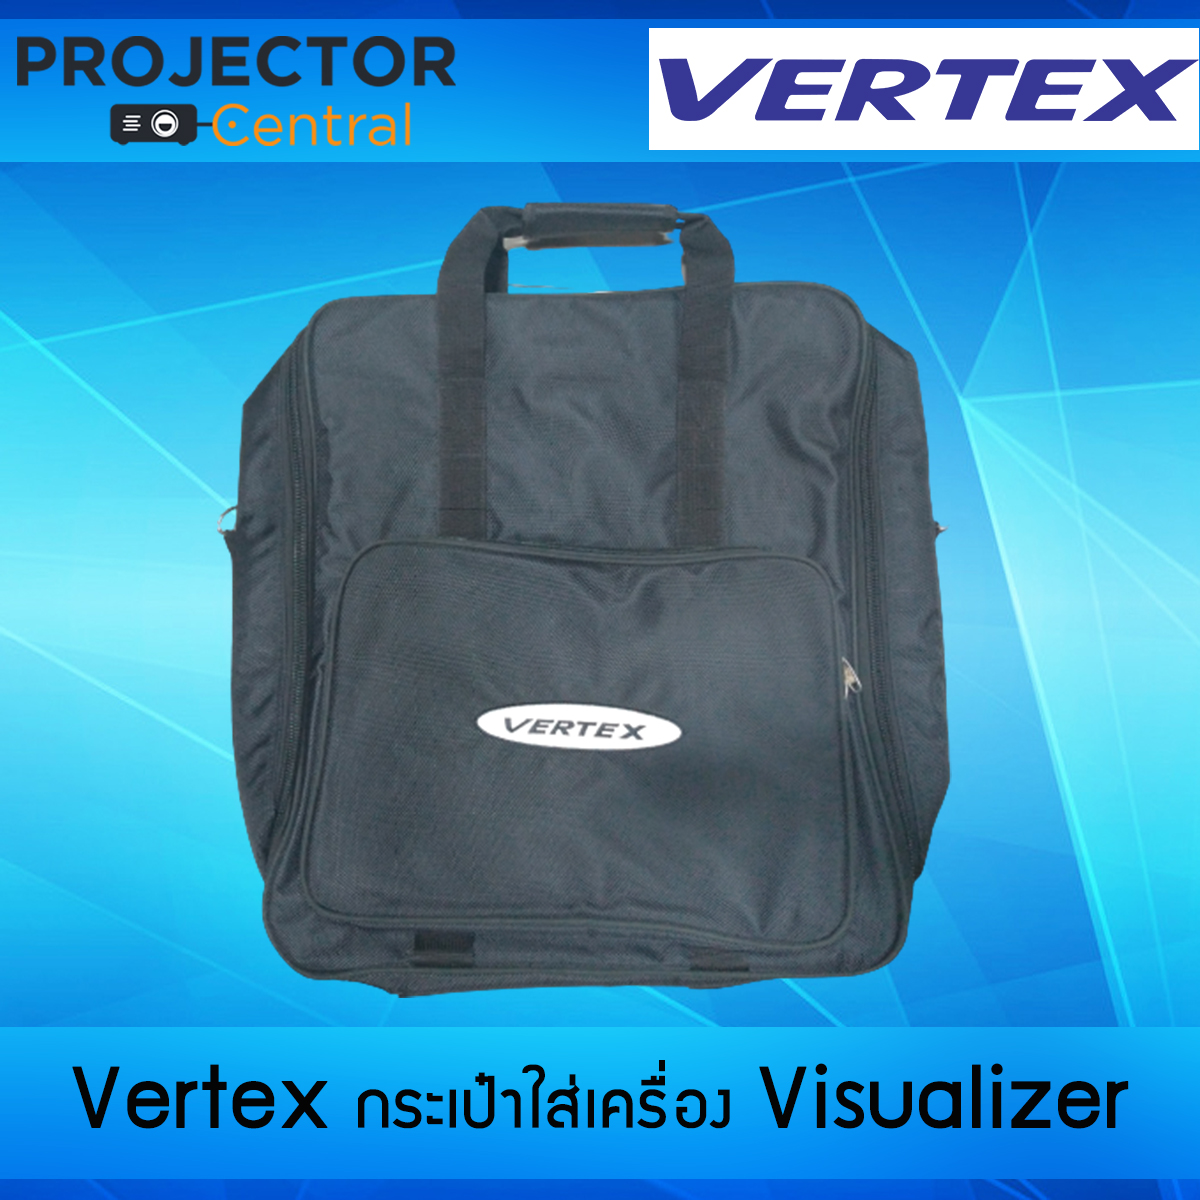 Vertex Visualizer Bag กระเป๋าใส่เครื่องวิชวลไลเซอร์ขนาดใหญ่